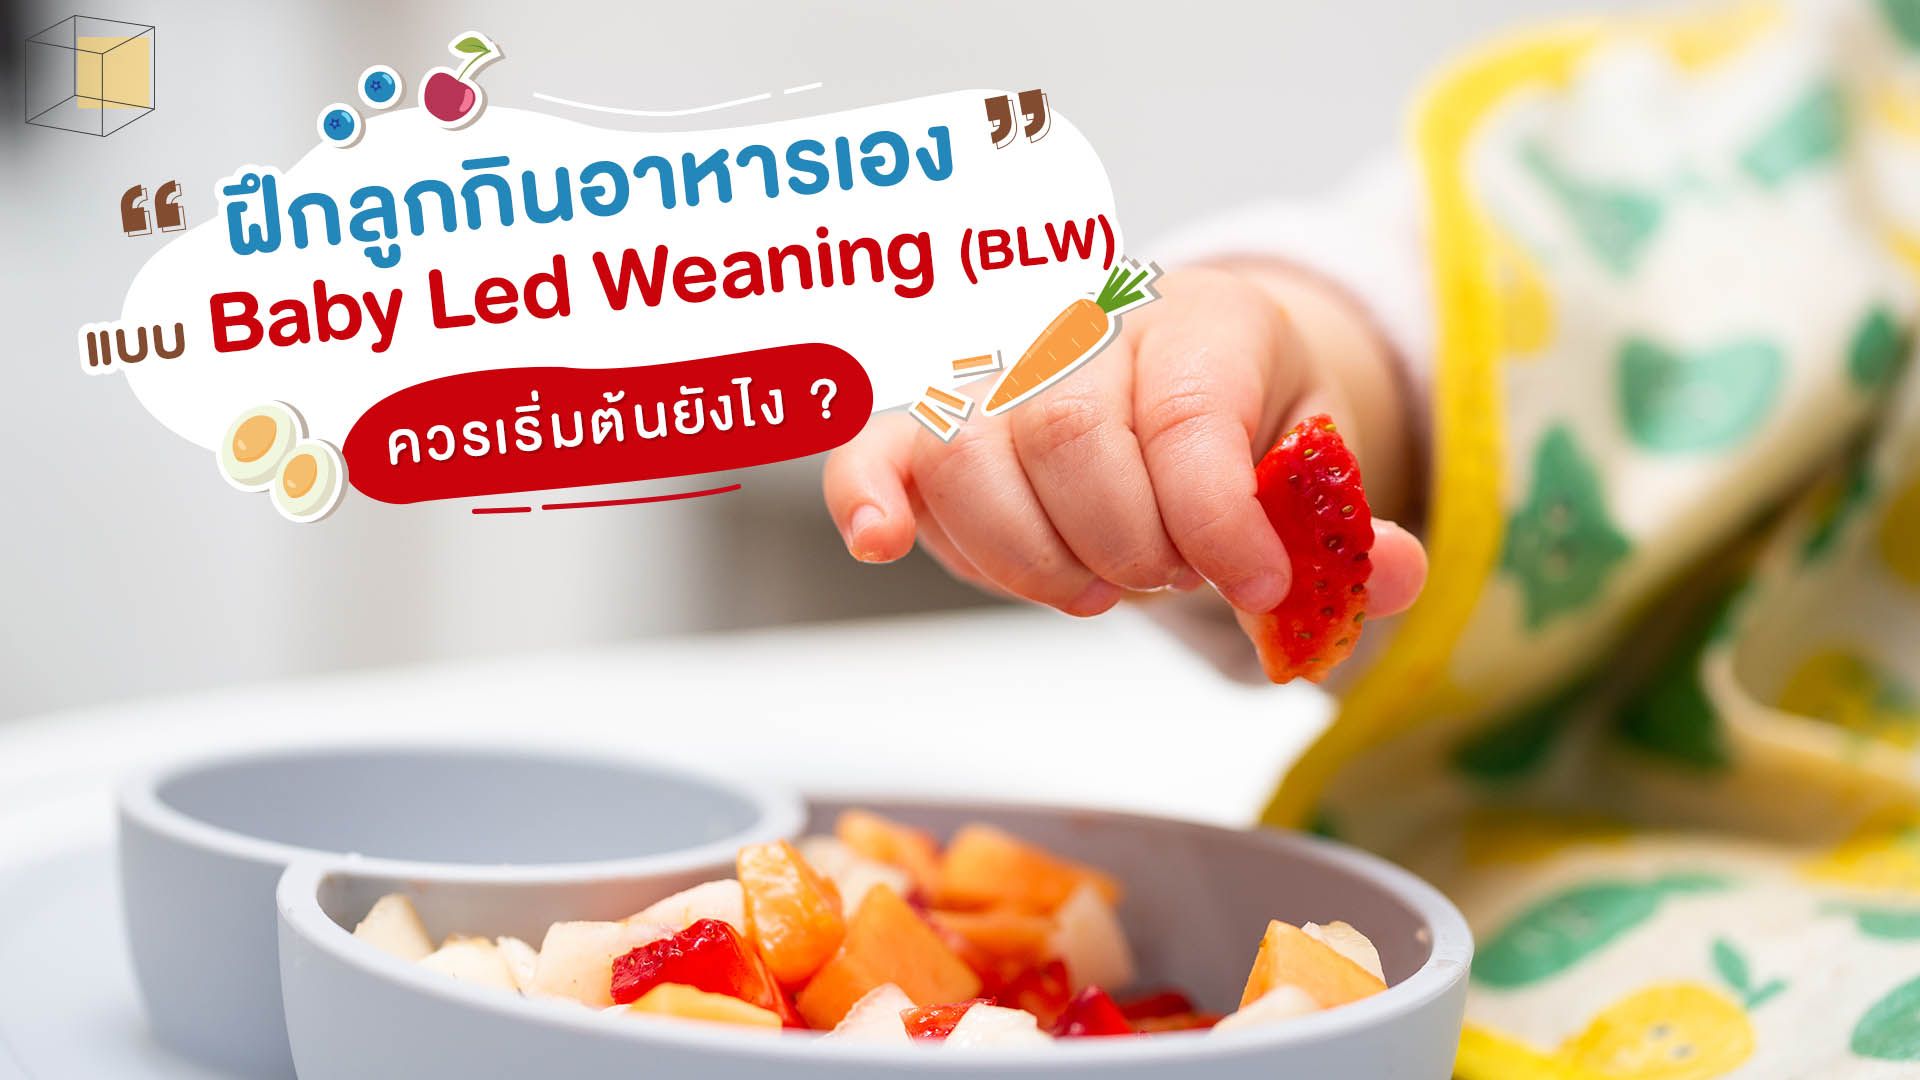 Baby Led Weaning (BLW) วิธีฝึกลูกกินข้าวเองให้เป็น